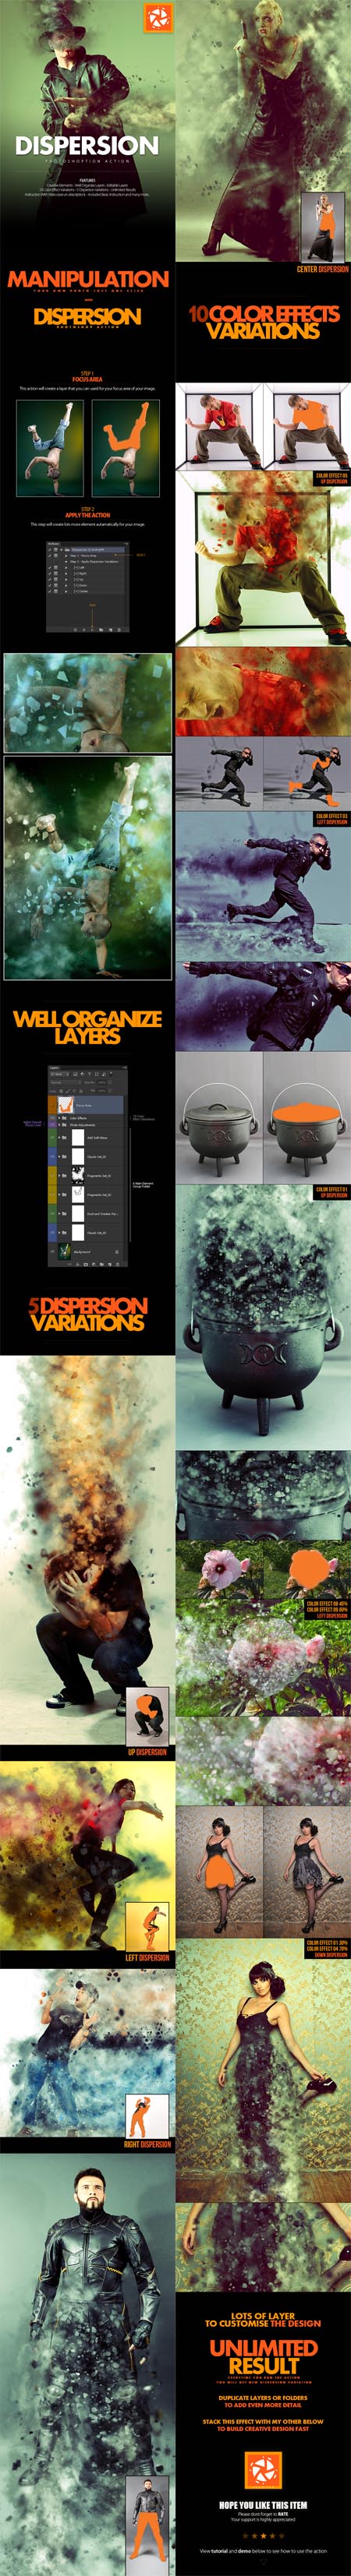 GraphicRiver - Dispersion Photoshop Action 14375715